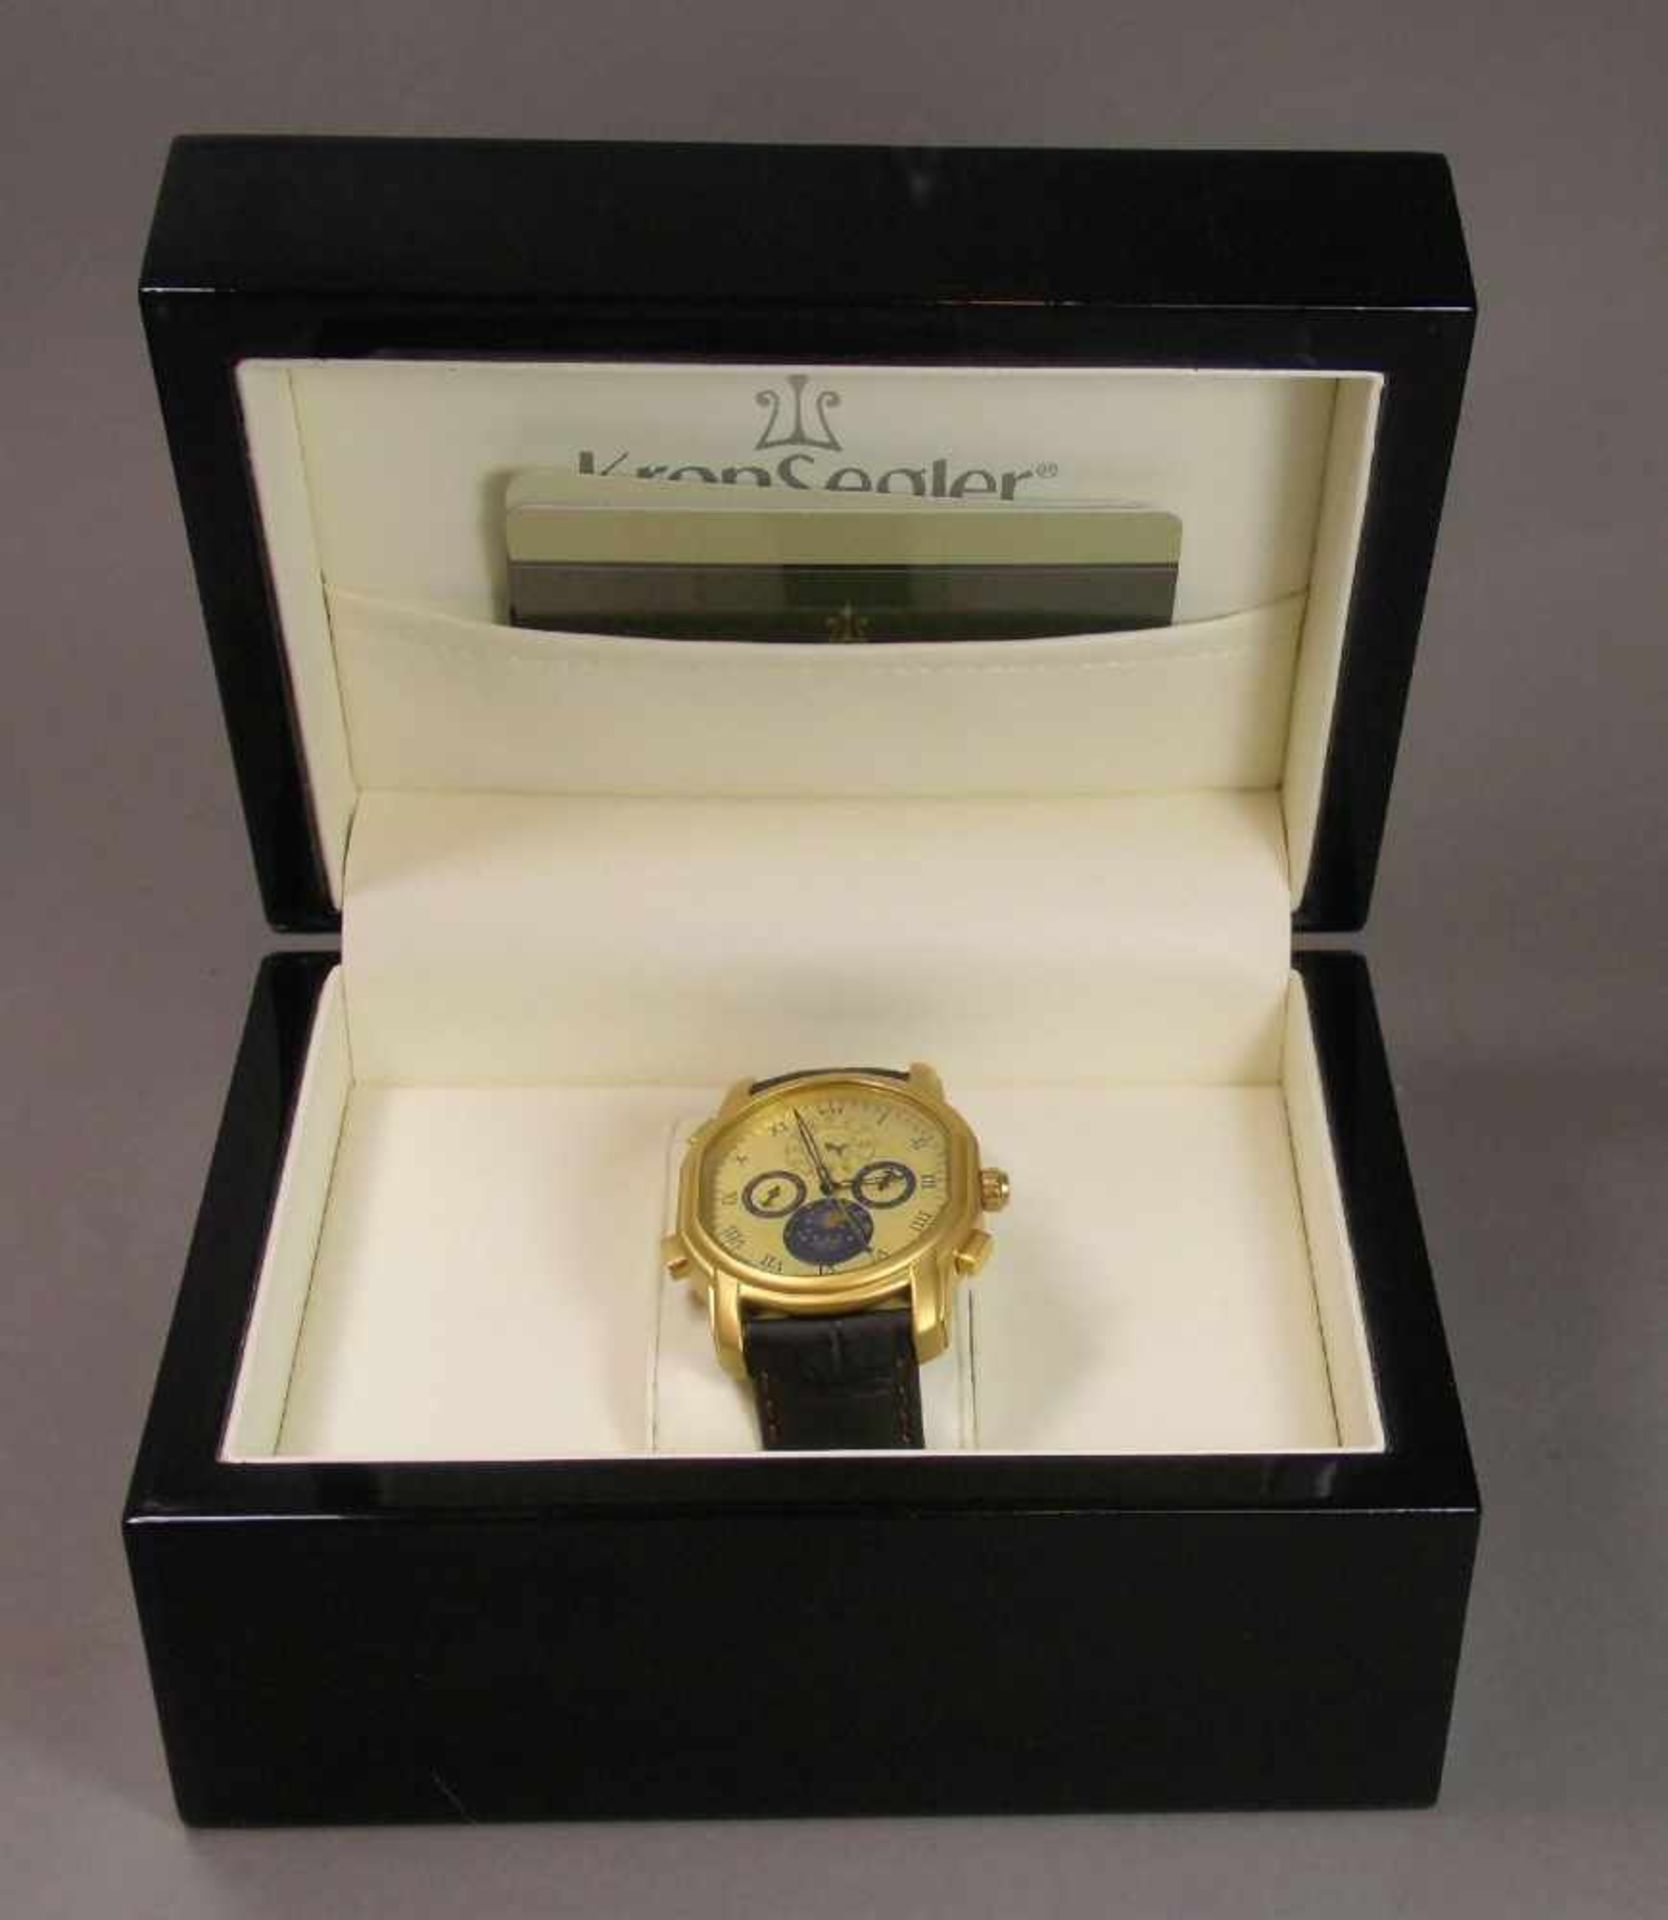 ARMBANDUHR / CHRONOGRAPH / wristwatch, Quartz-Uhr, Manufaktur Kronsegler GmbH / Glashütte - Sachsen, - Image 2 of 7